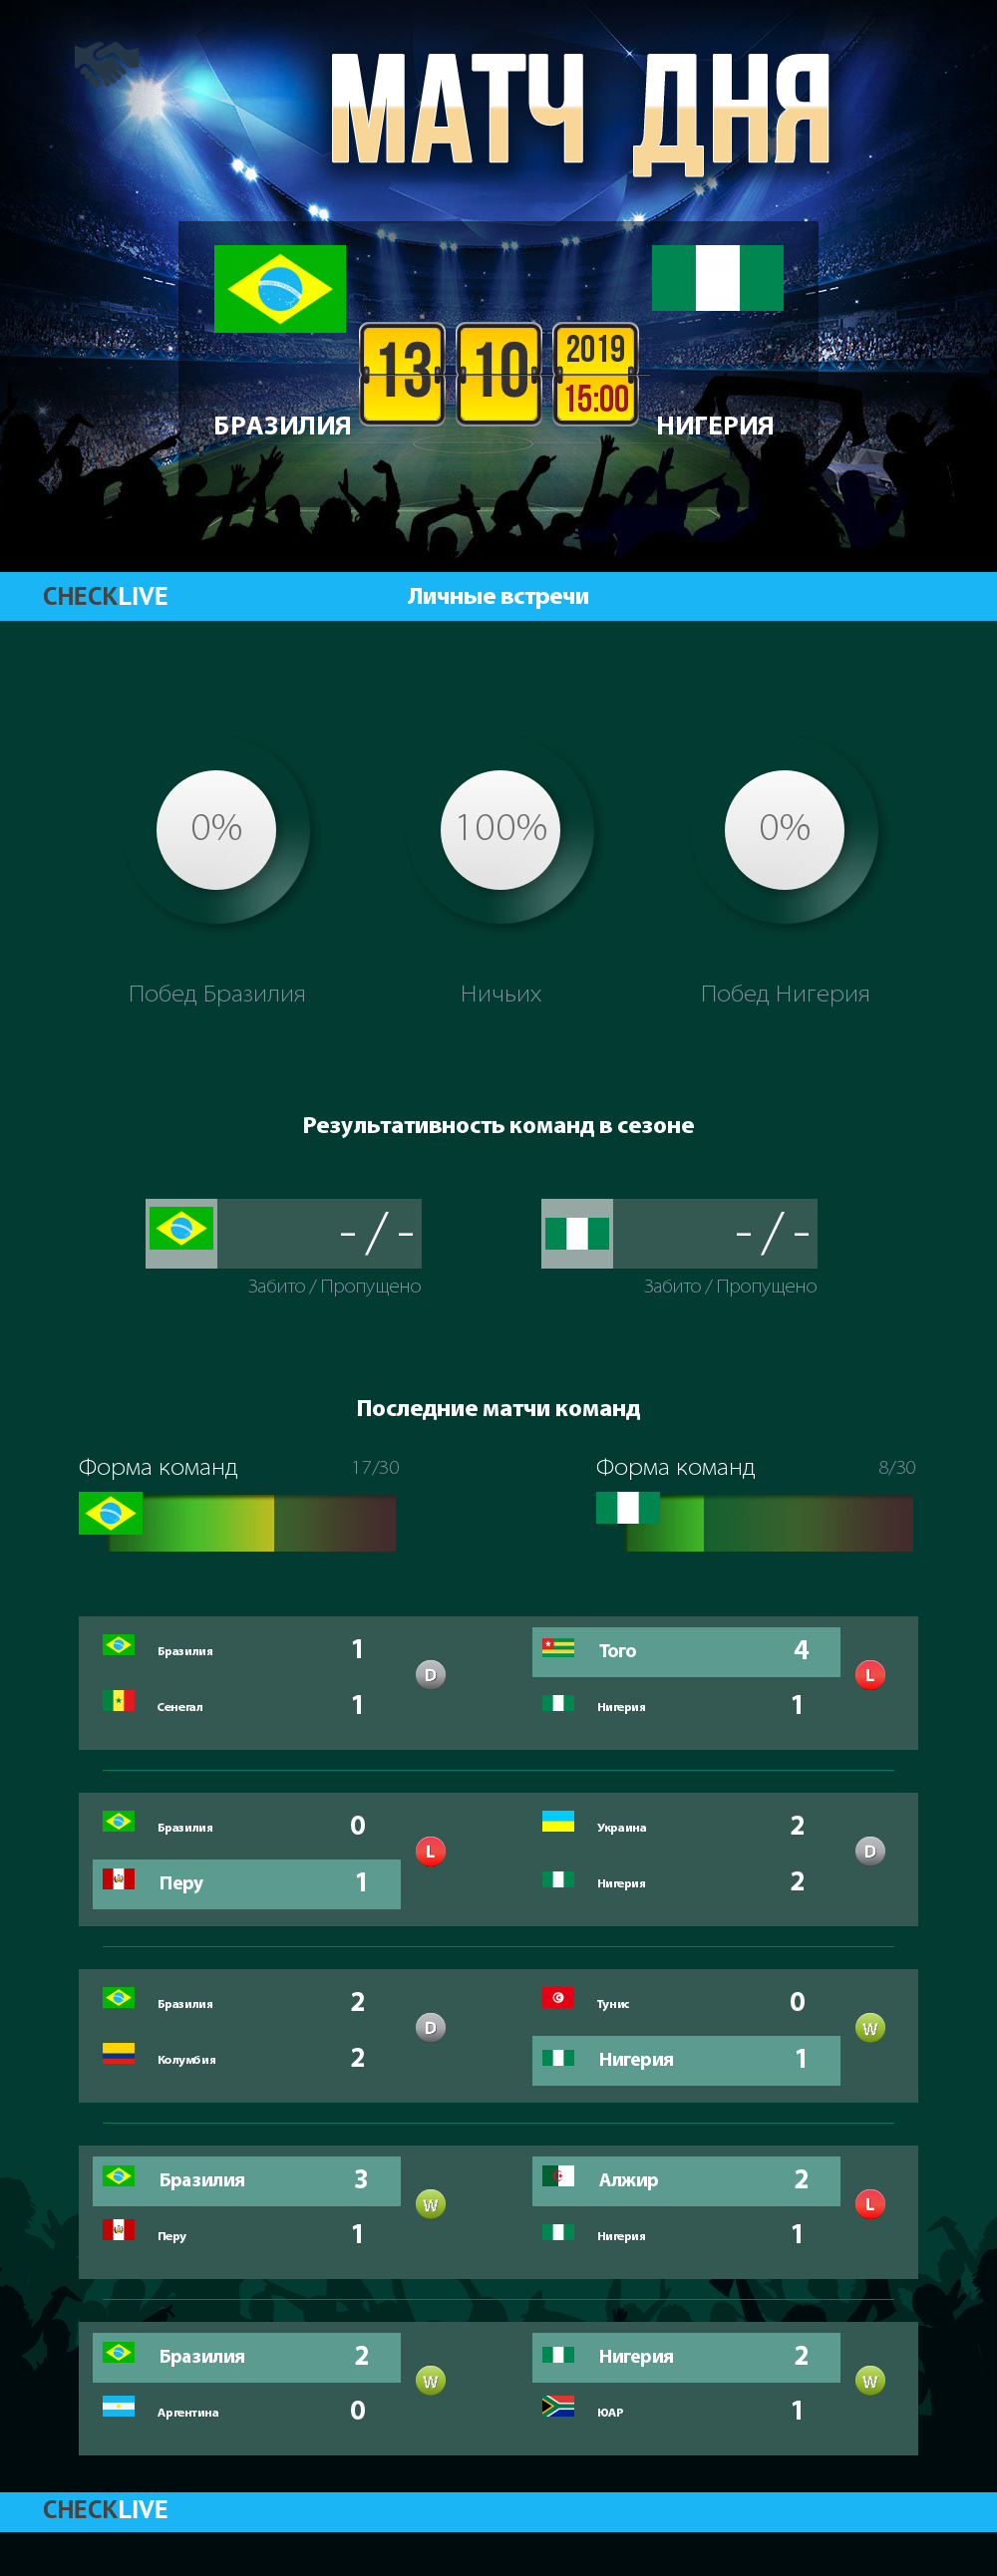 Инфографика Бразилия и Нигерия матч дня 13.10.2019